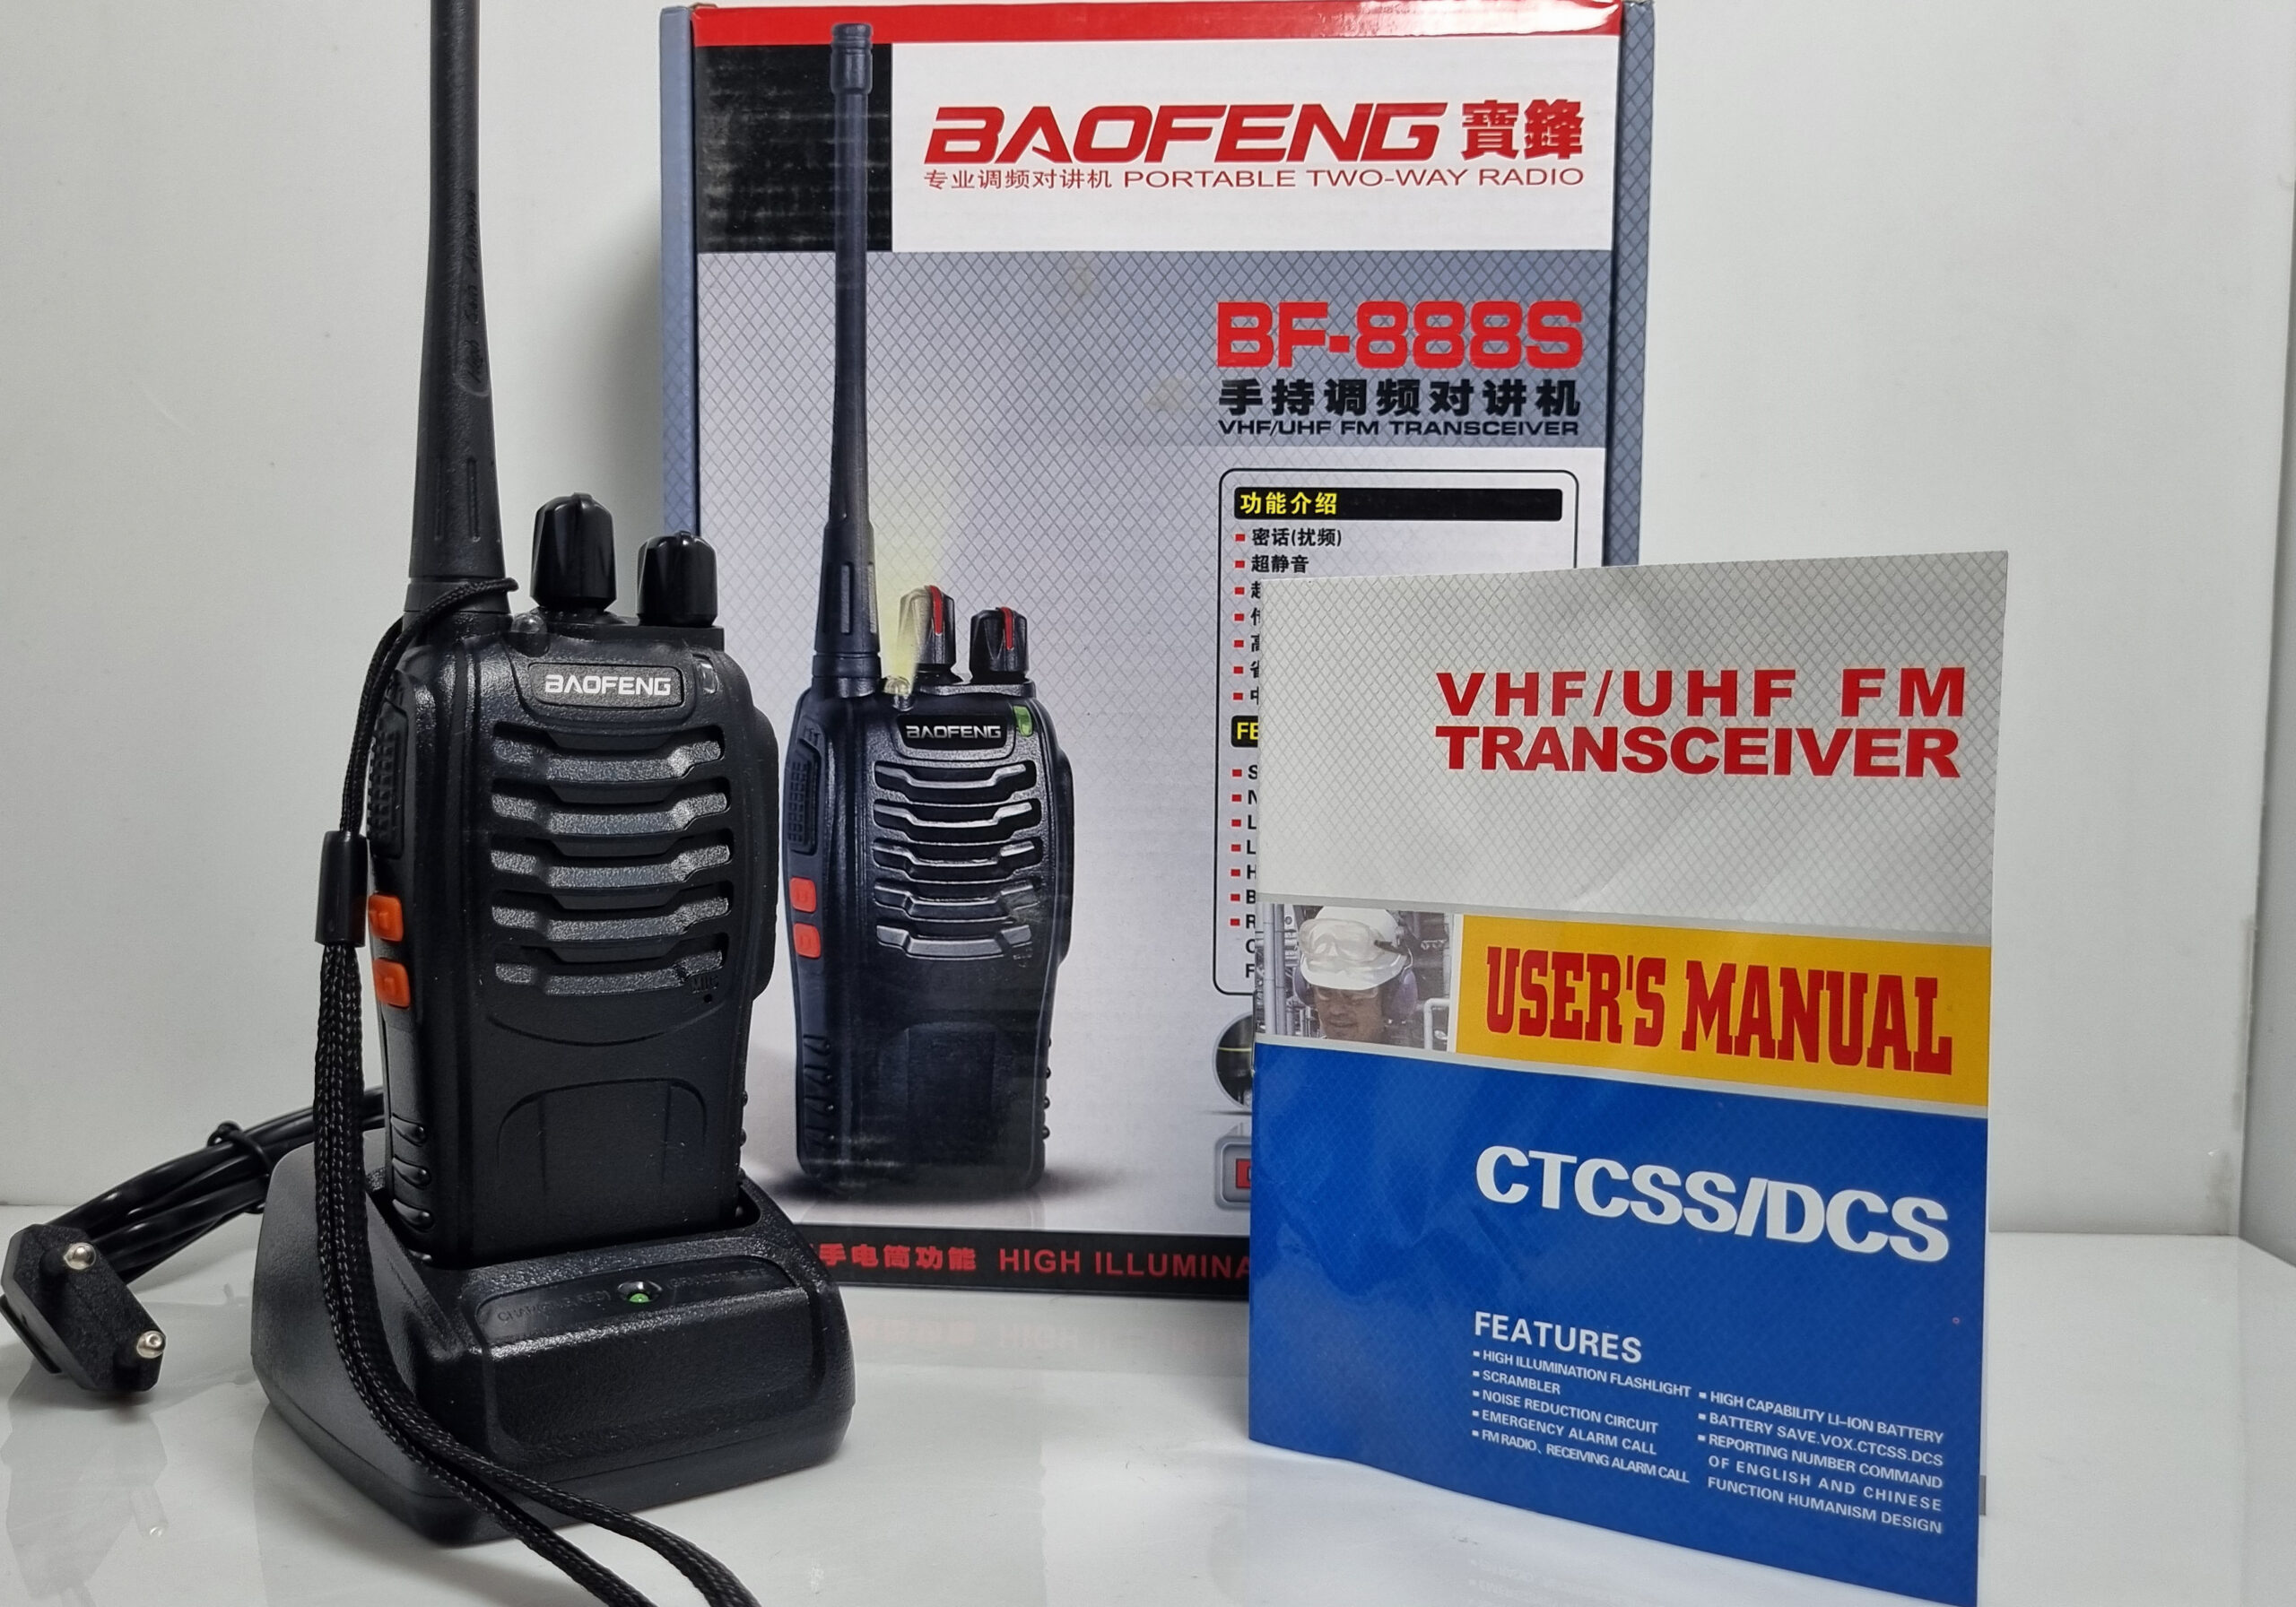 بیسیم باوفنگ Baofeng مدل BF-888S